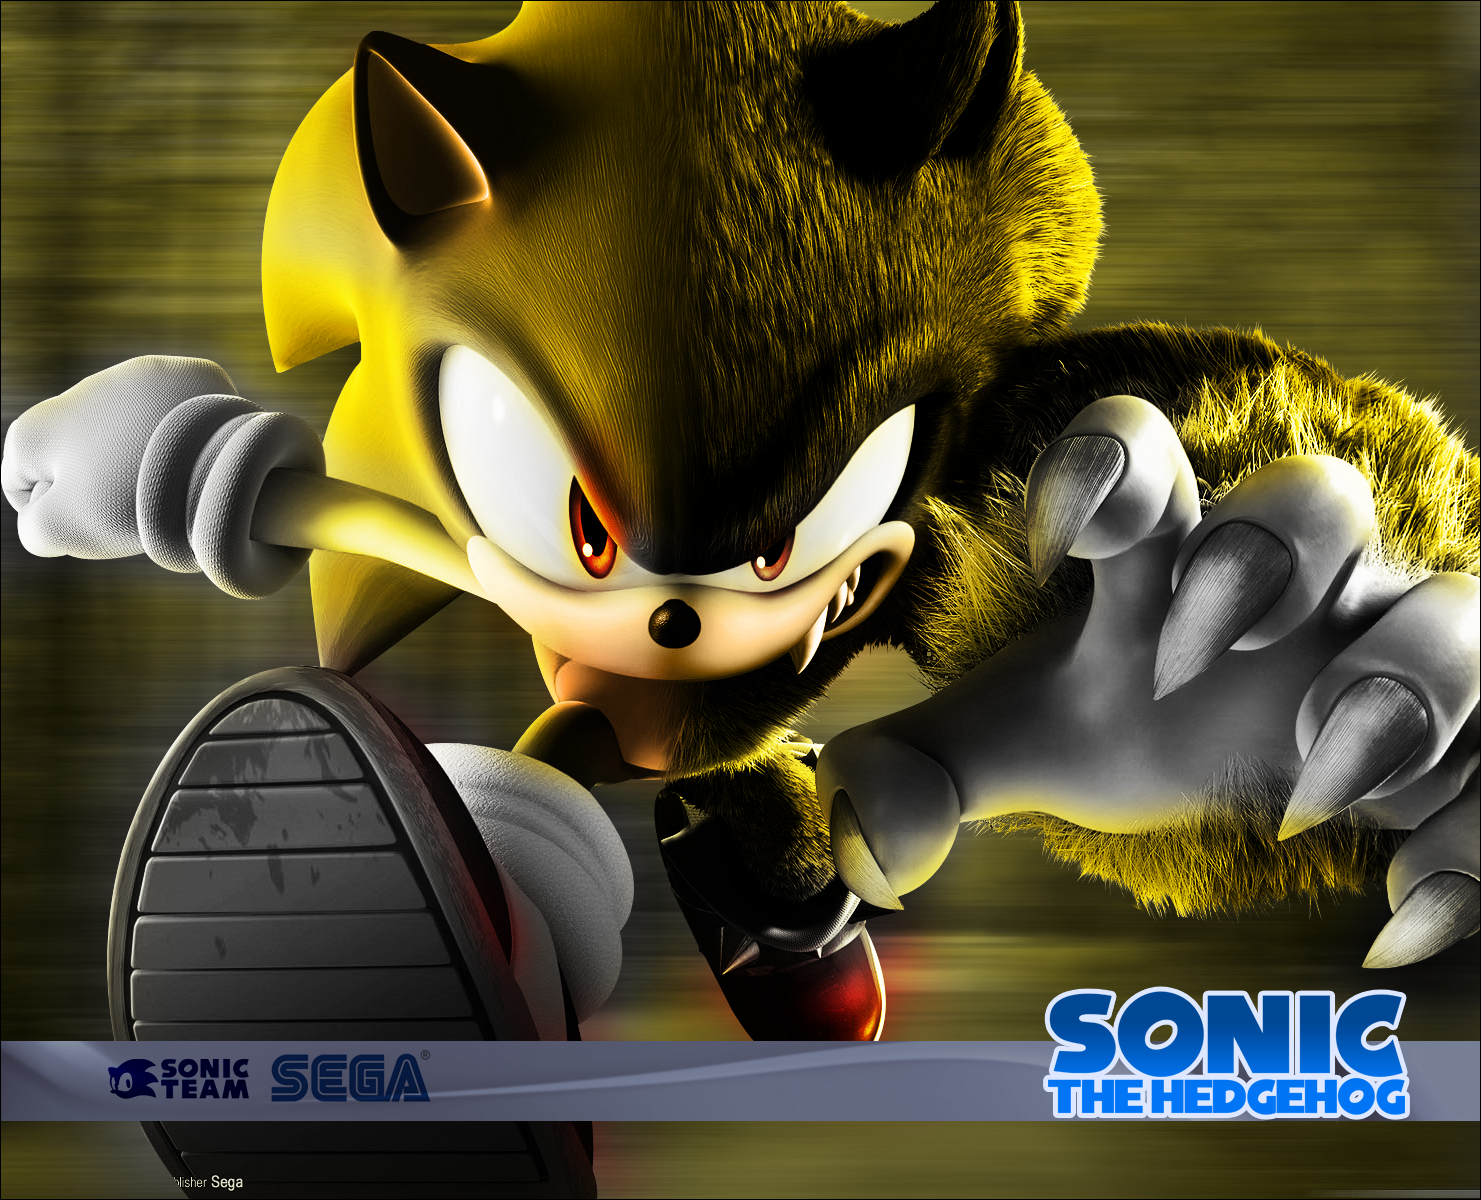 Sonic The Hedgehog on SuperSonic-Team - DeviantArt.